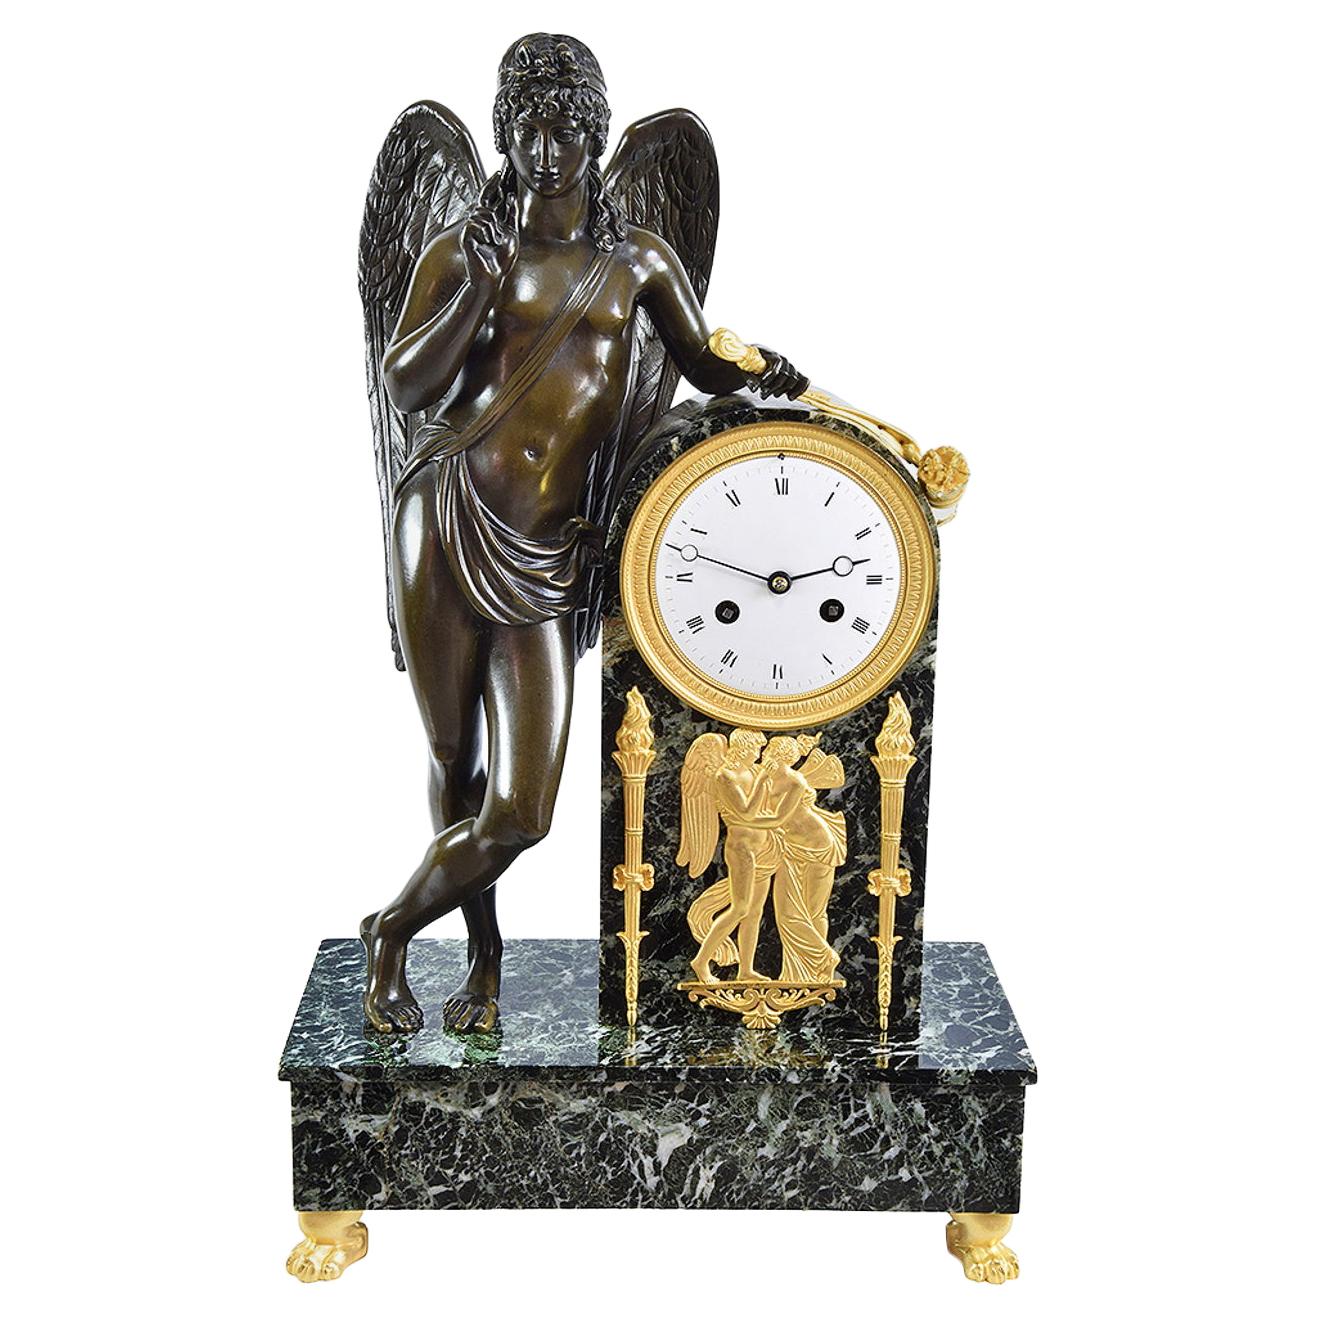 Empire Period Clock, Early 19th Century